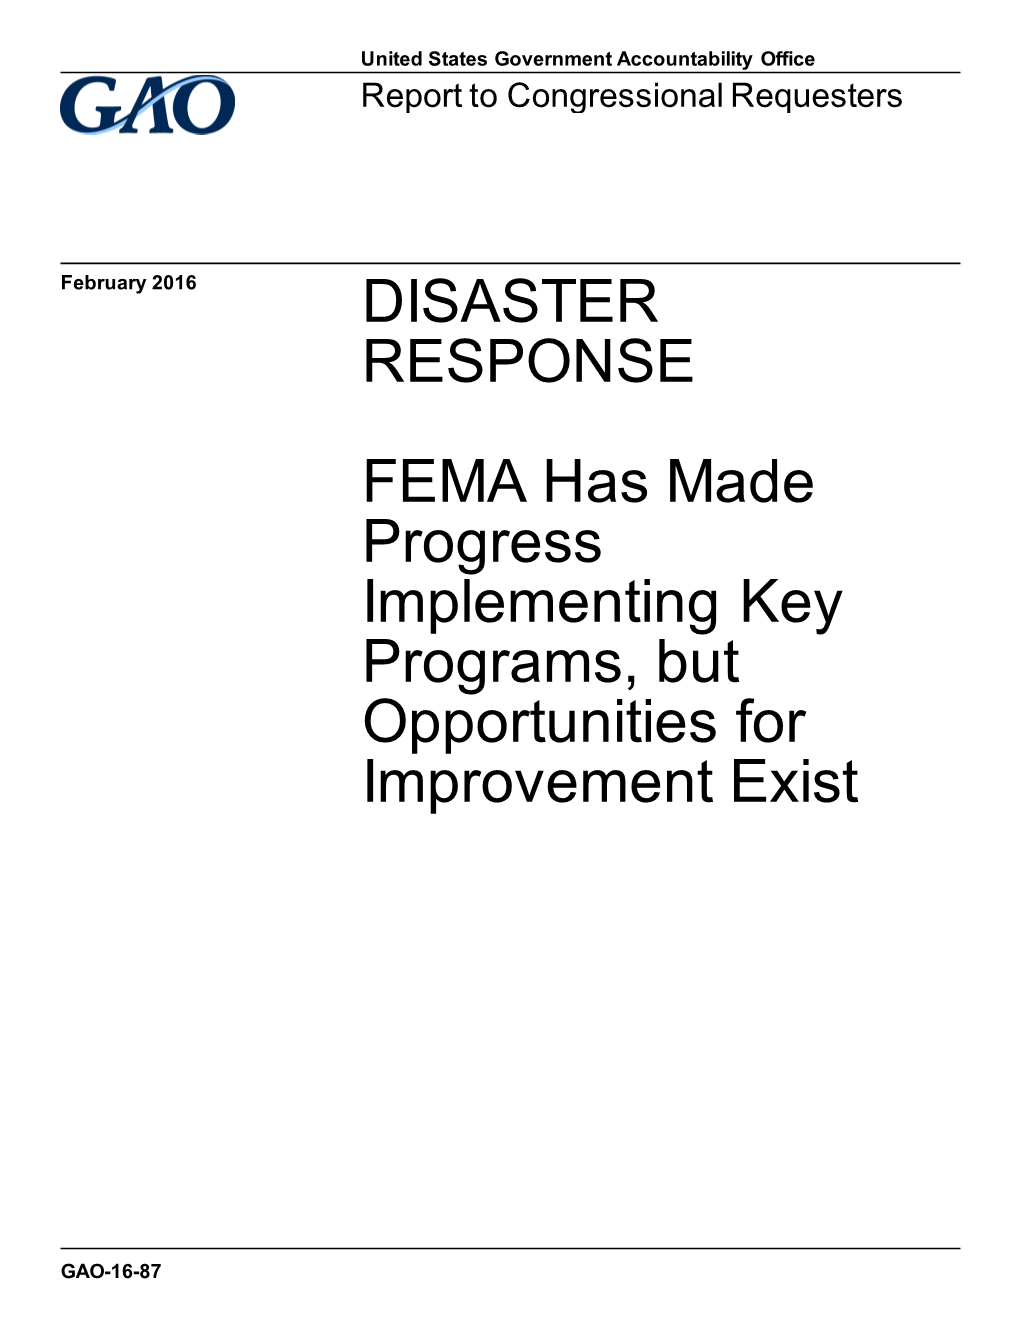 GAO-16-87, DISASTER RESPONSE: FEMA Has Made Progress